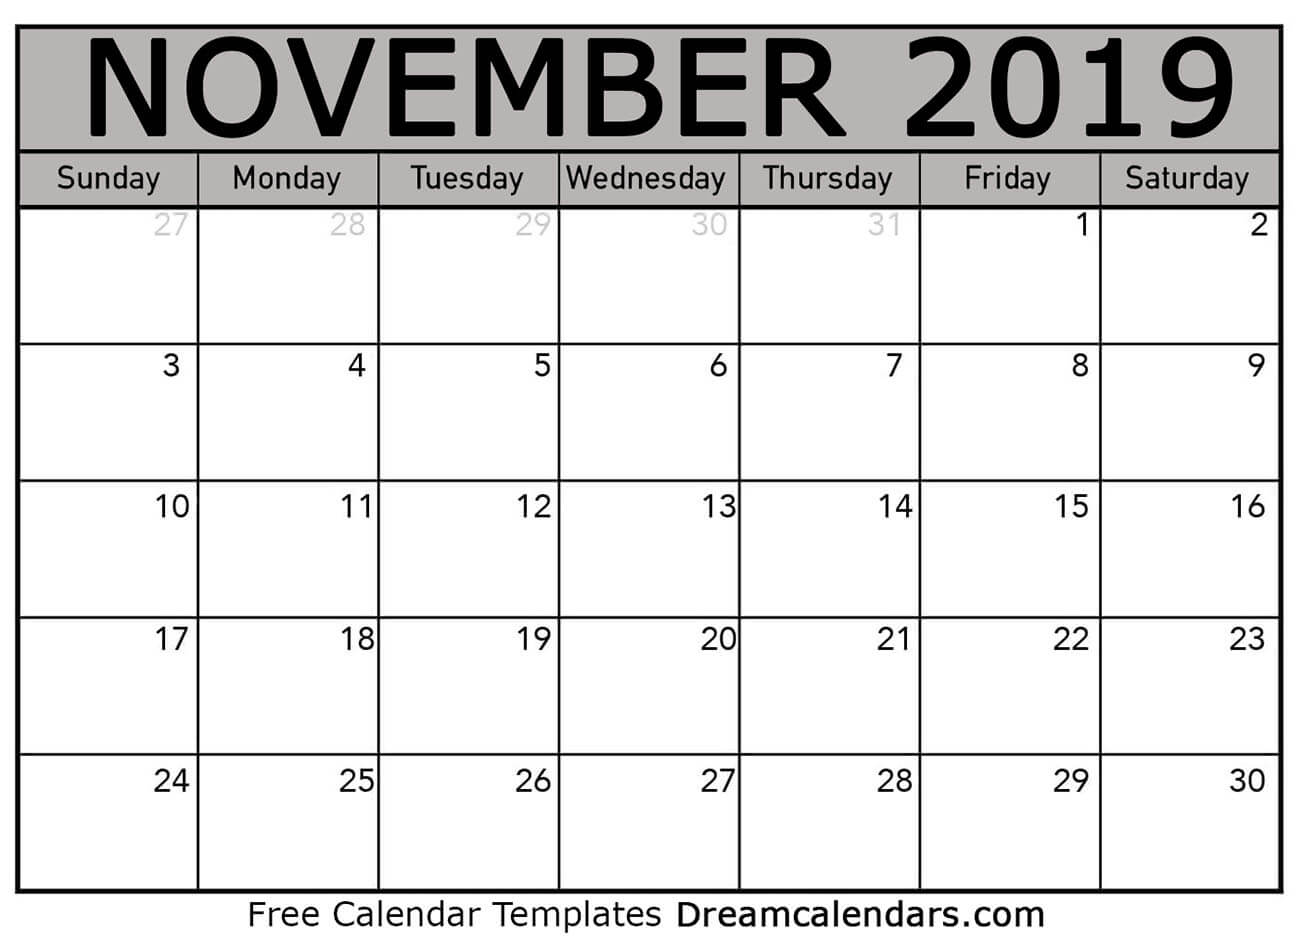 download-printable-november-2019-calendars